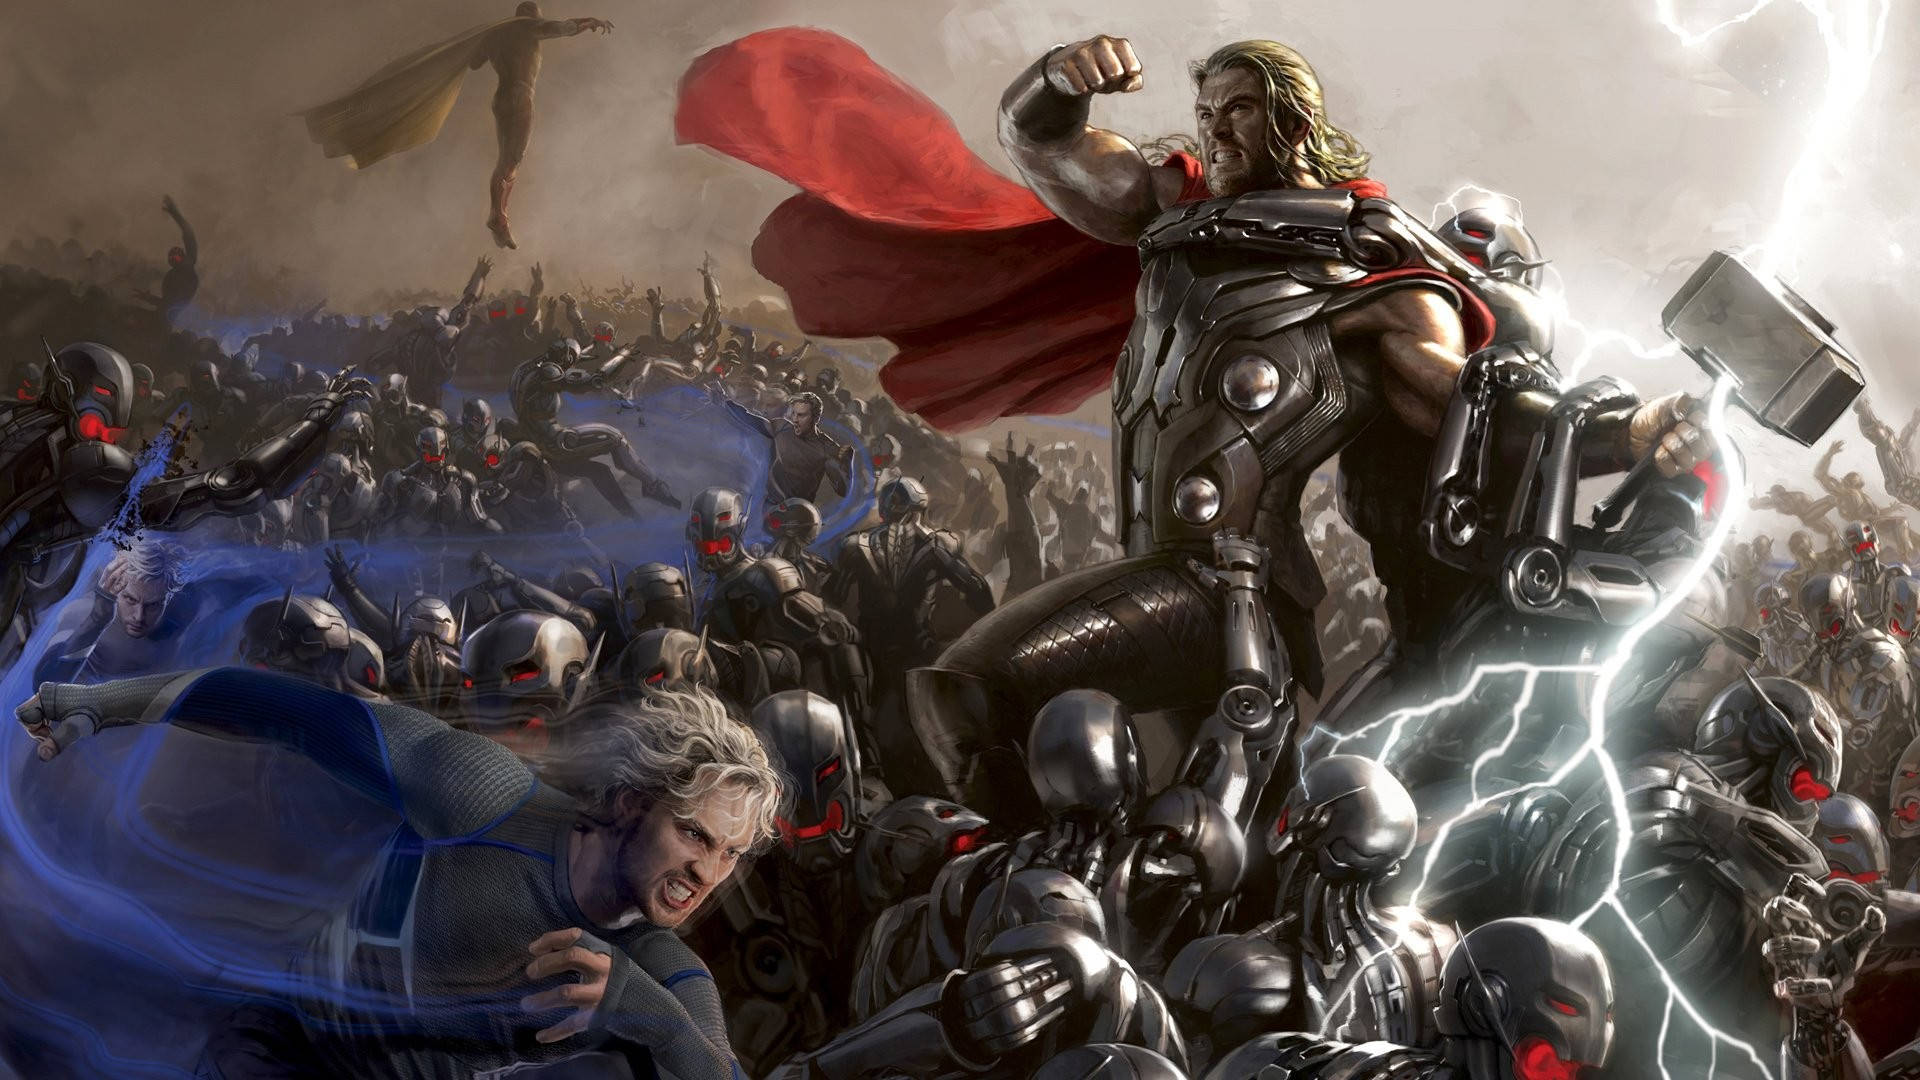 Thor Against The Devilish Ultron Background